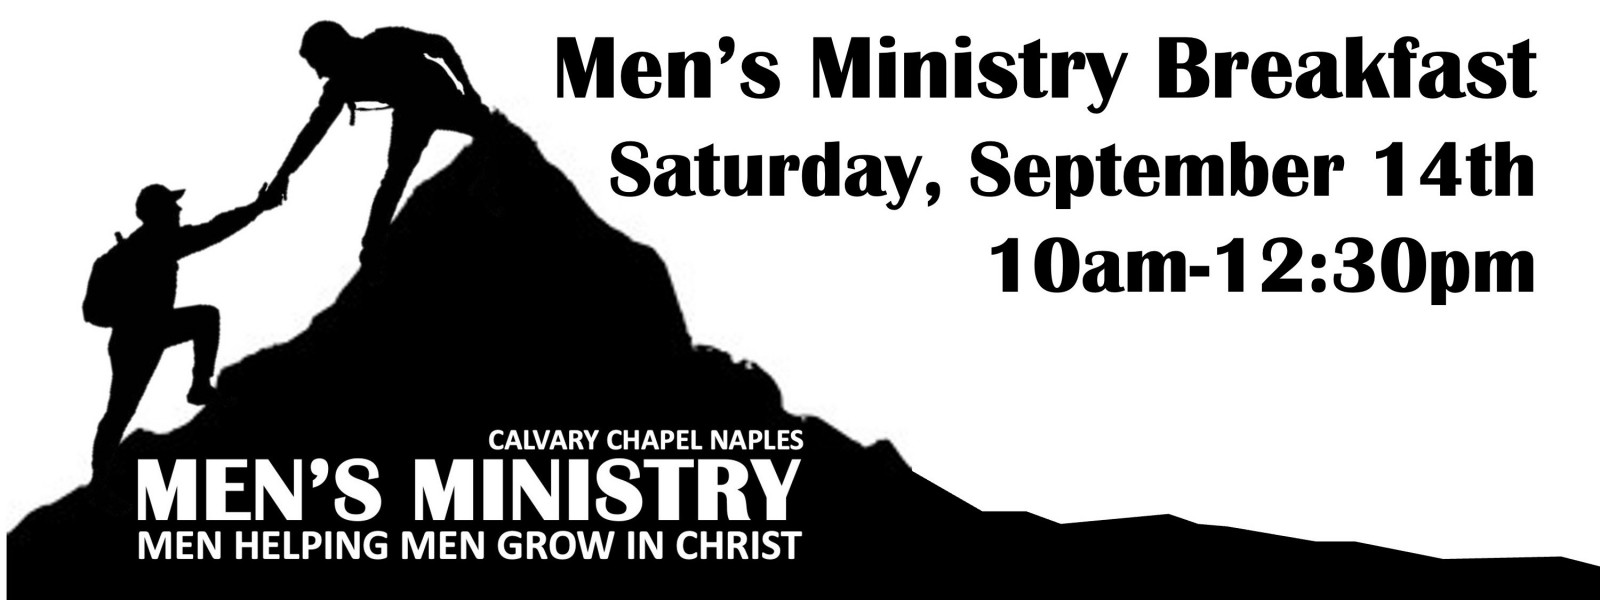 Men's Fellowship Breakfast, Saturday, September 14th at 10 am at Calvary chapel Naples